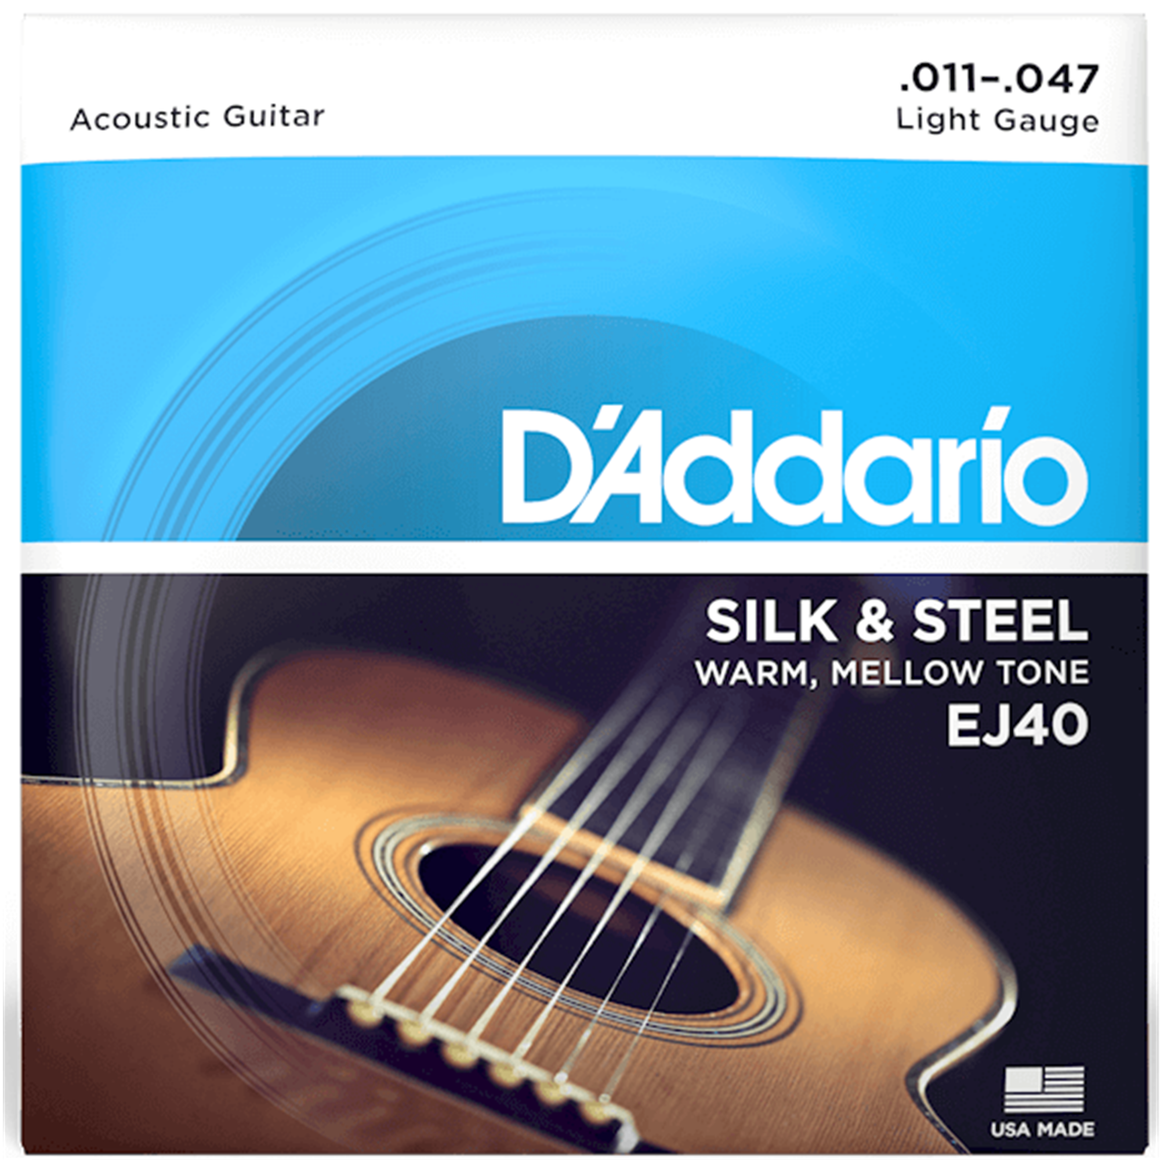 D'ADDARIO J40 Light Acoustic Guitar Strings, Silk & Steel